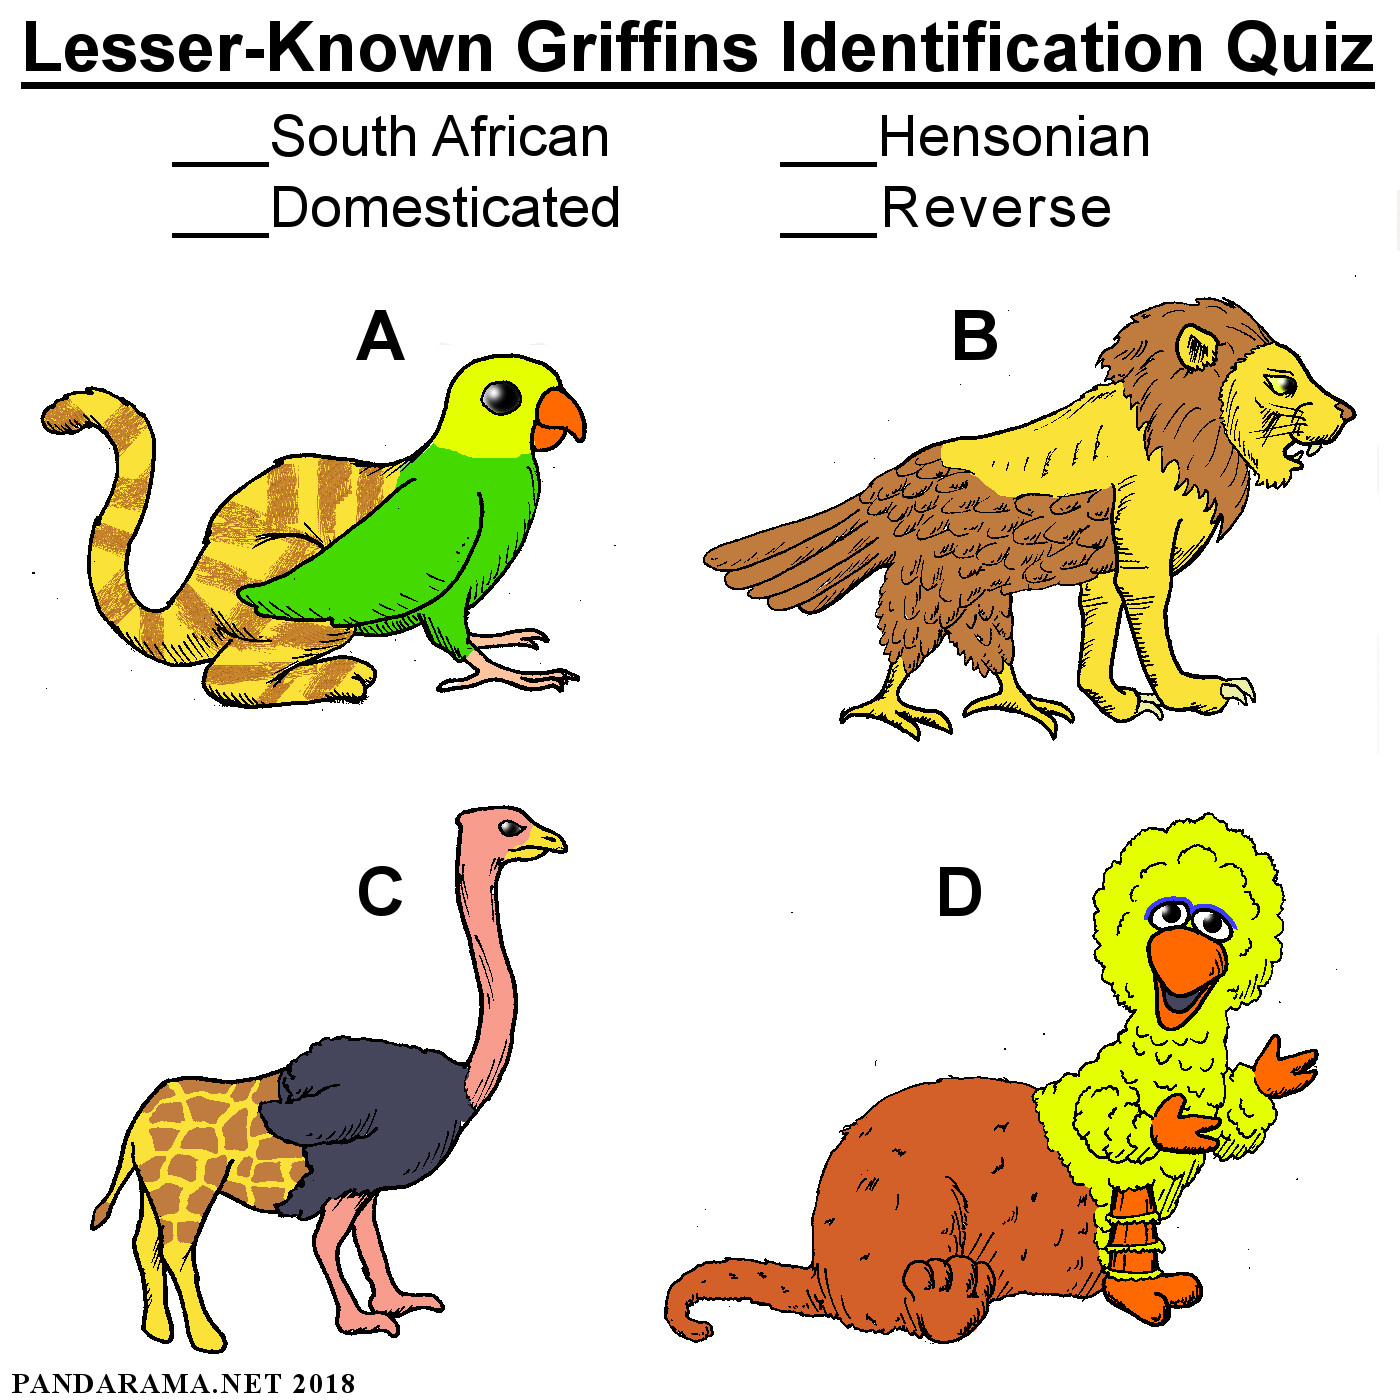 Matching Quiz showing a South African griffin = ostrich/giraffe, domestic griffin = parakeet/house cat, reverse = lion/eagle, hensonian = big bird/snuffleupagus.